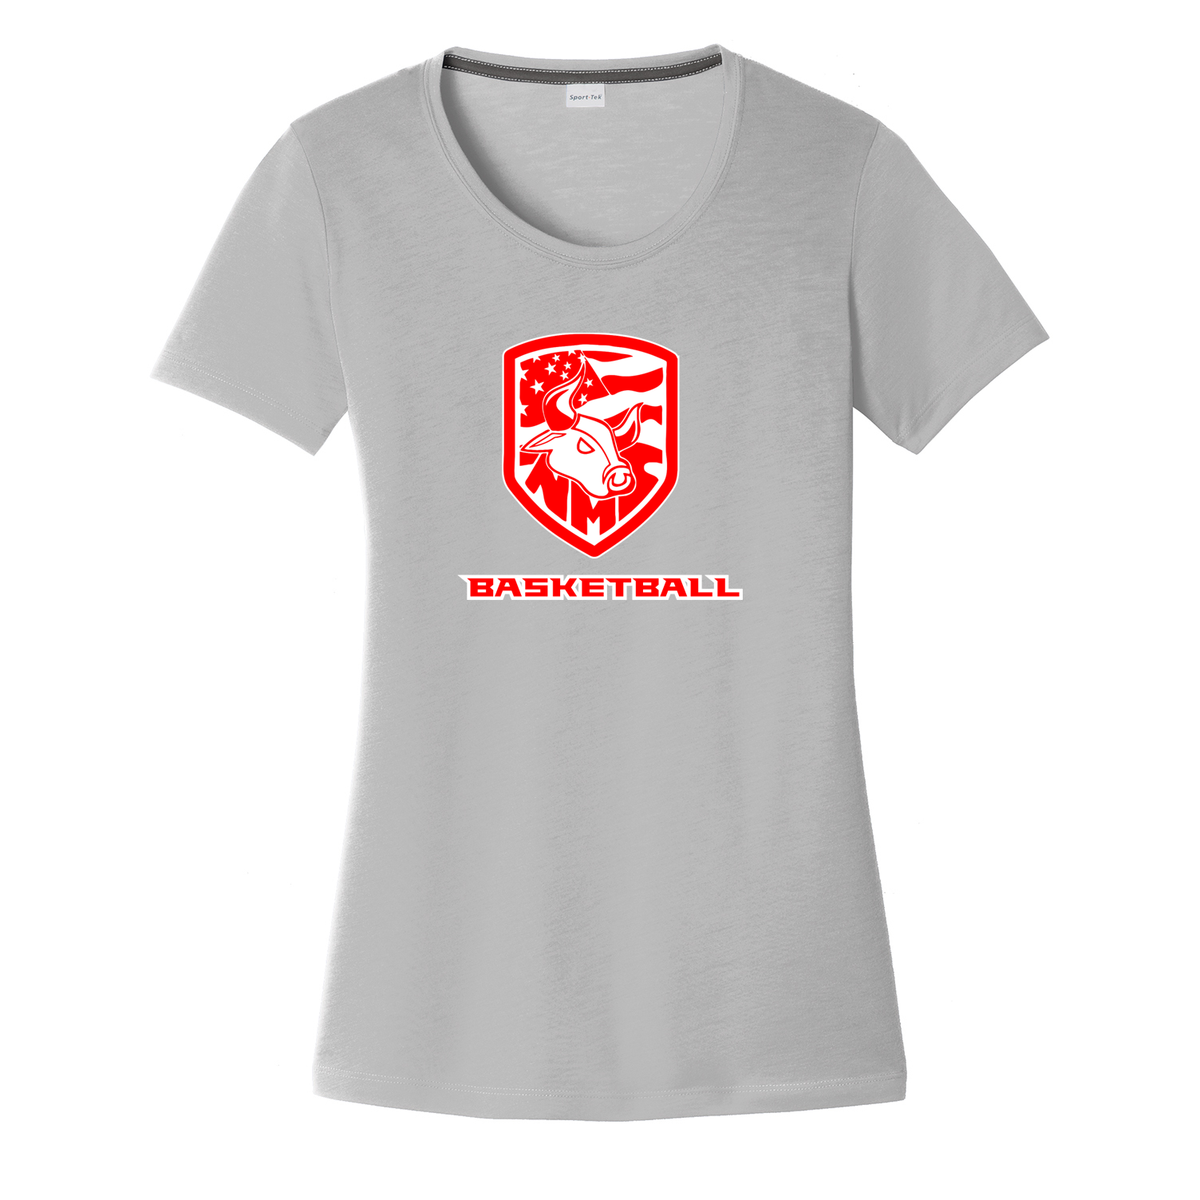 Nesaquake Basketball Women's CottonTouch Performance T-Shirt